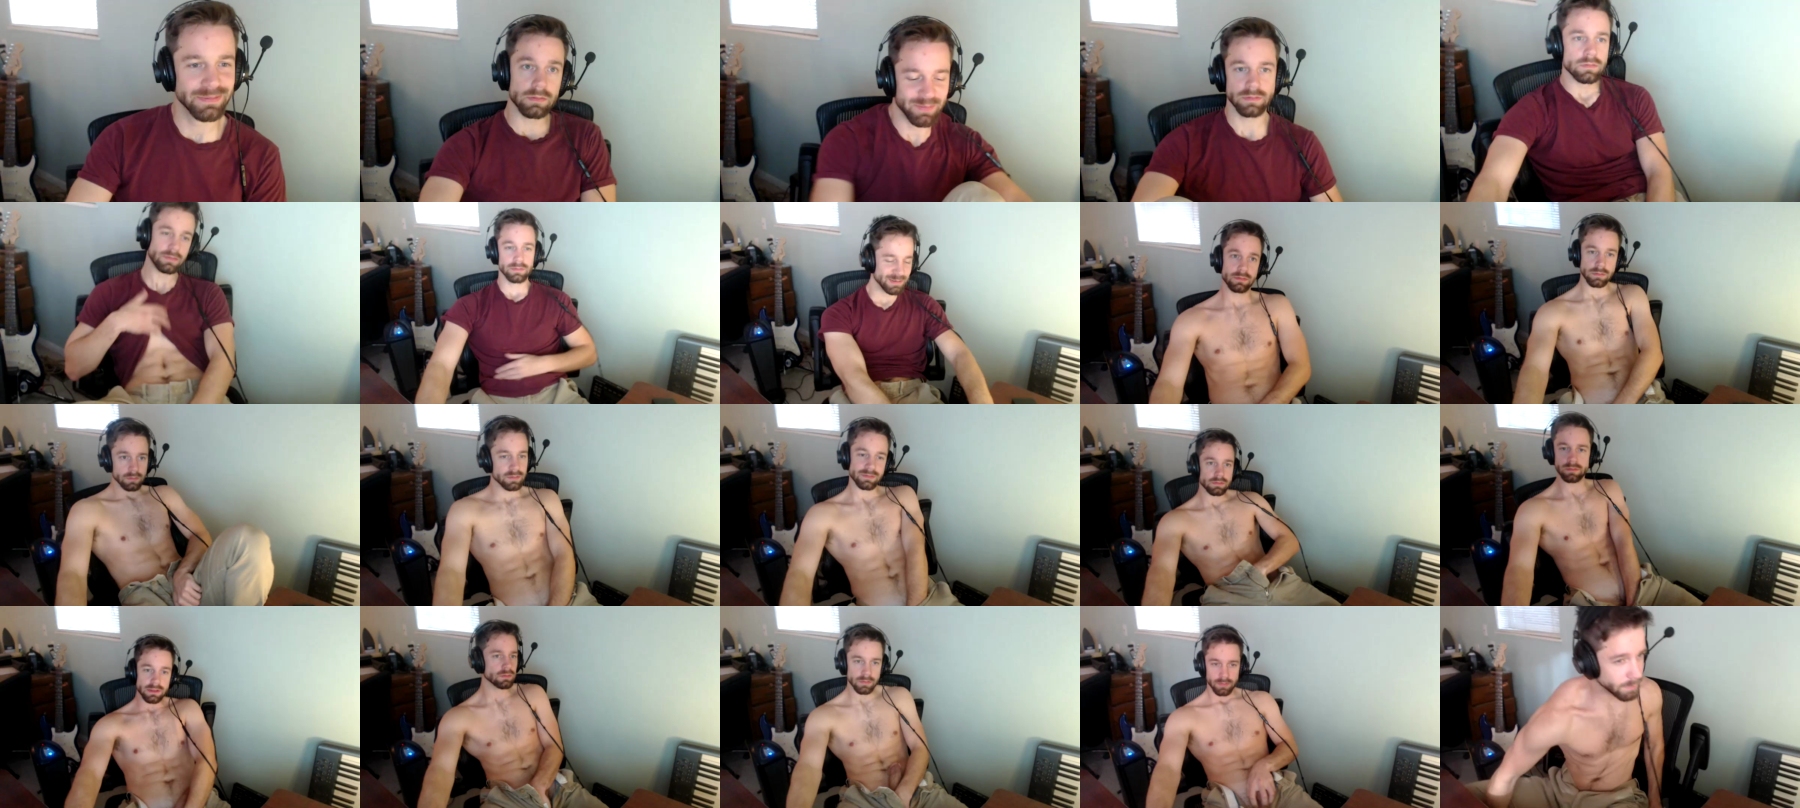 Dicksaretips  20-11-2021 Male Topless